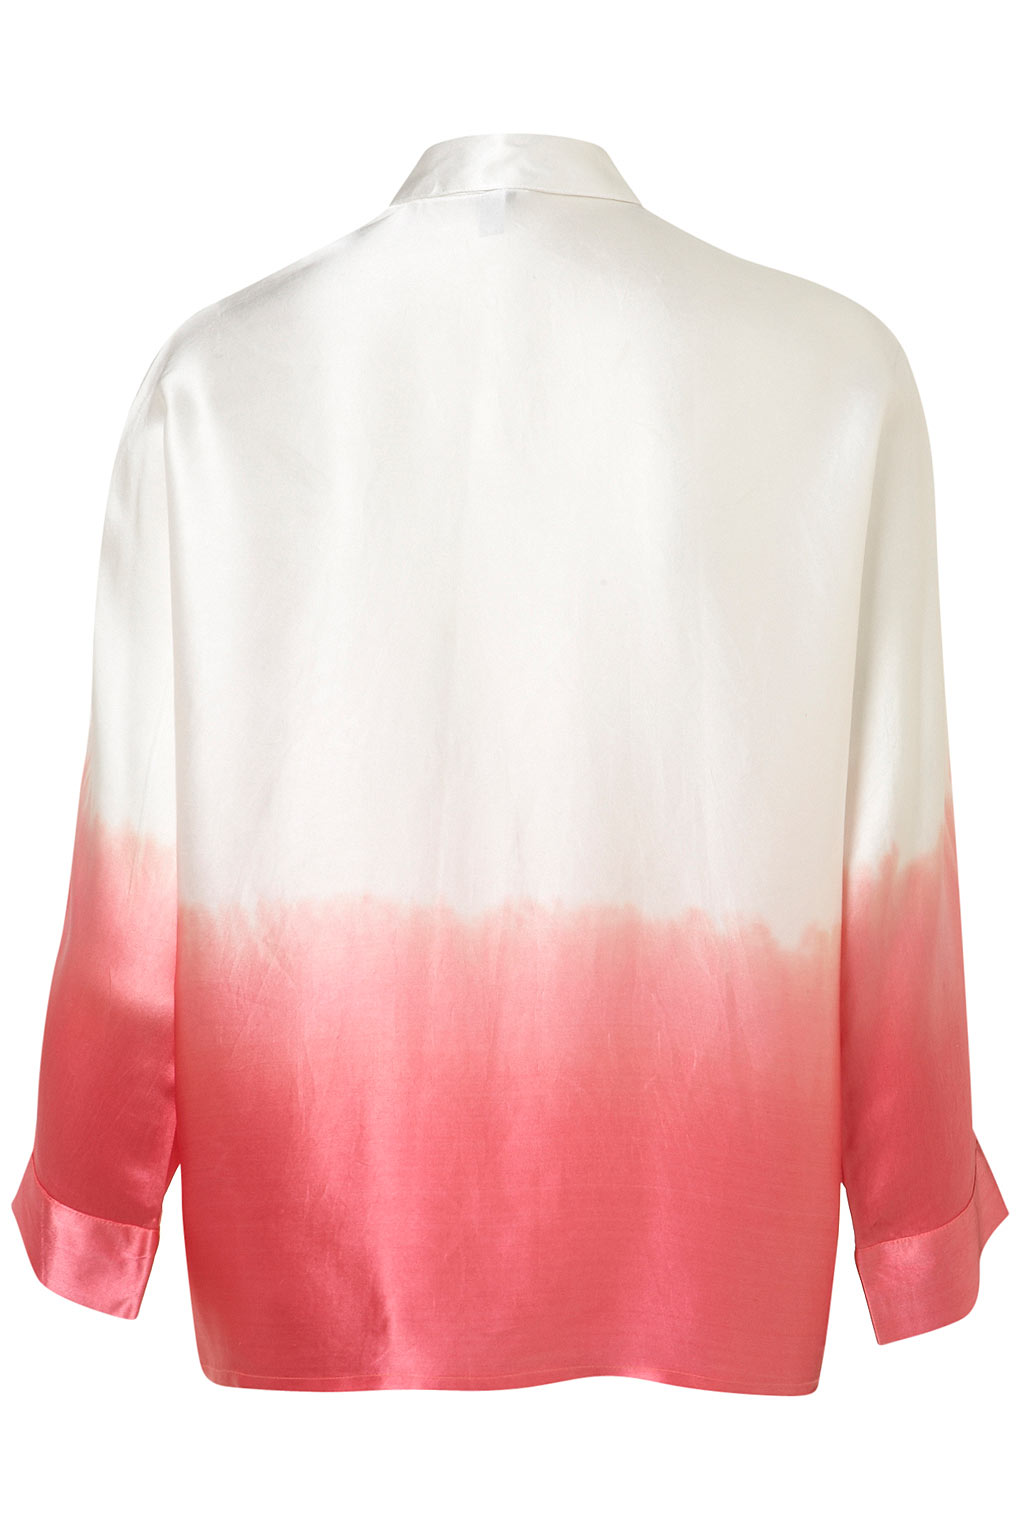 Lyst - Topshop Premium Ombre Silk Shirt in Pink